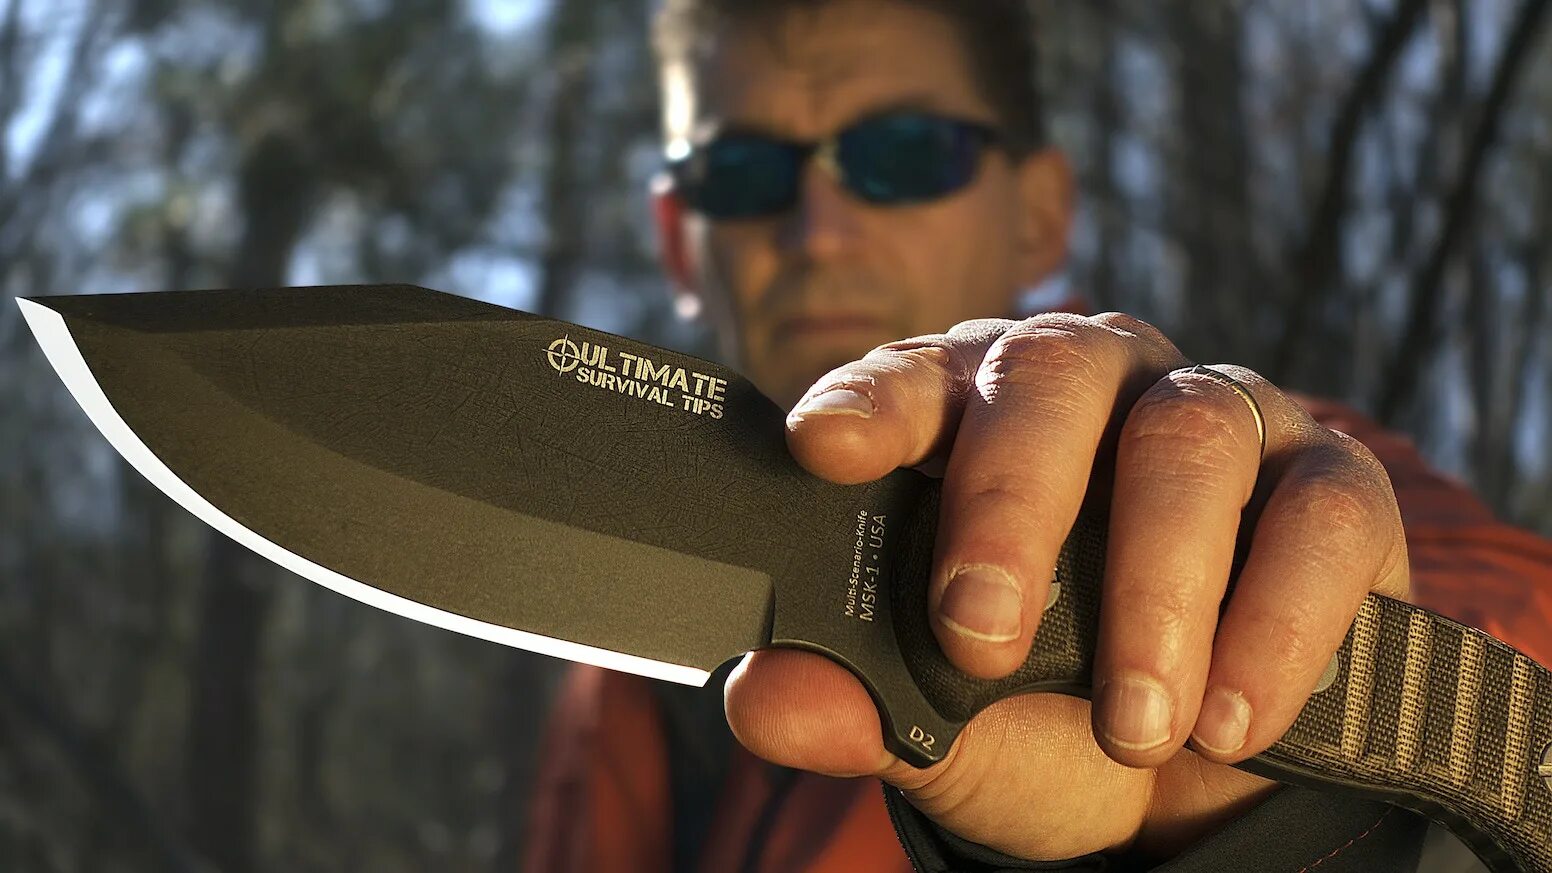 Msk-1 Survival Knife. Cut 1 нож. Нож Outdoor Mate. Survival Knife нож охотничий.